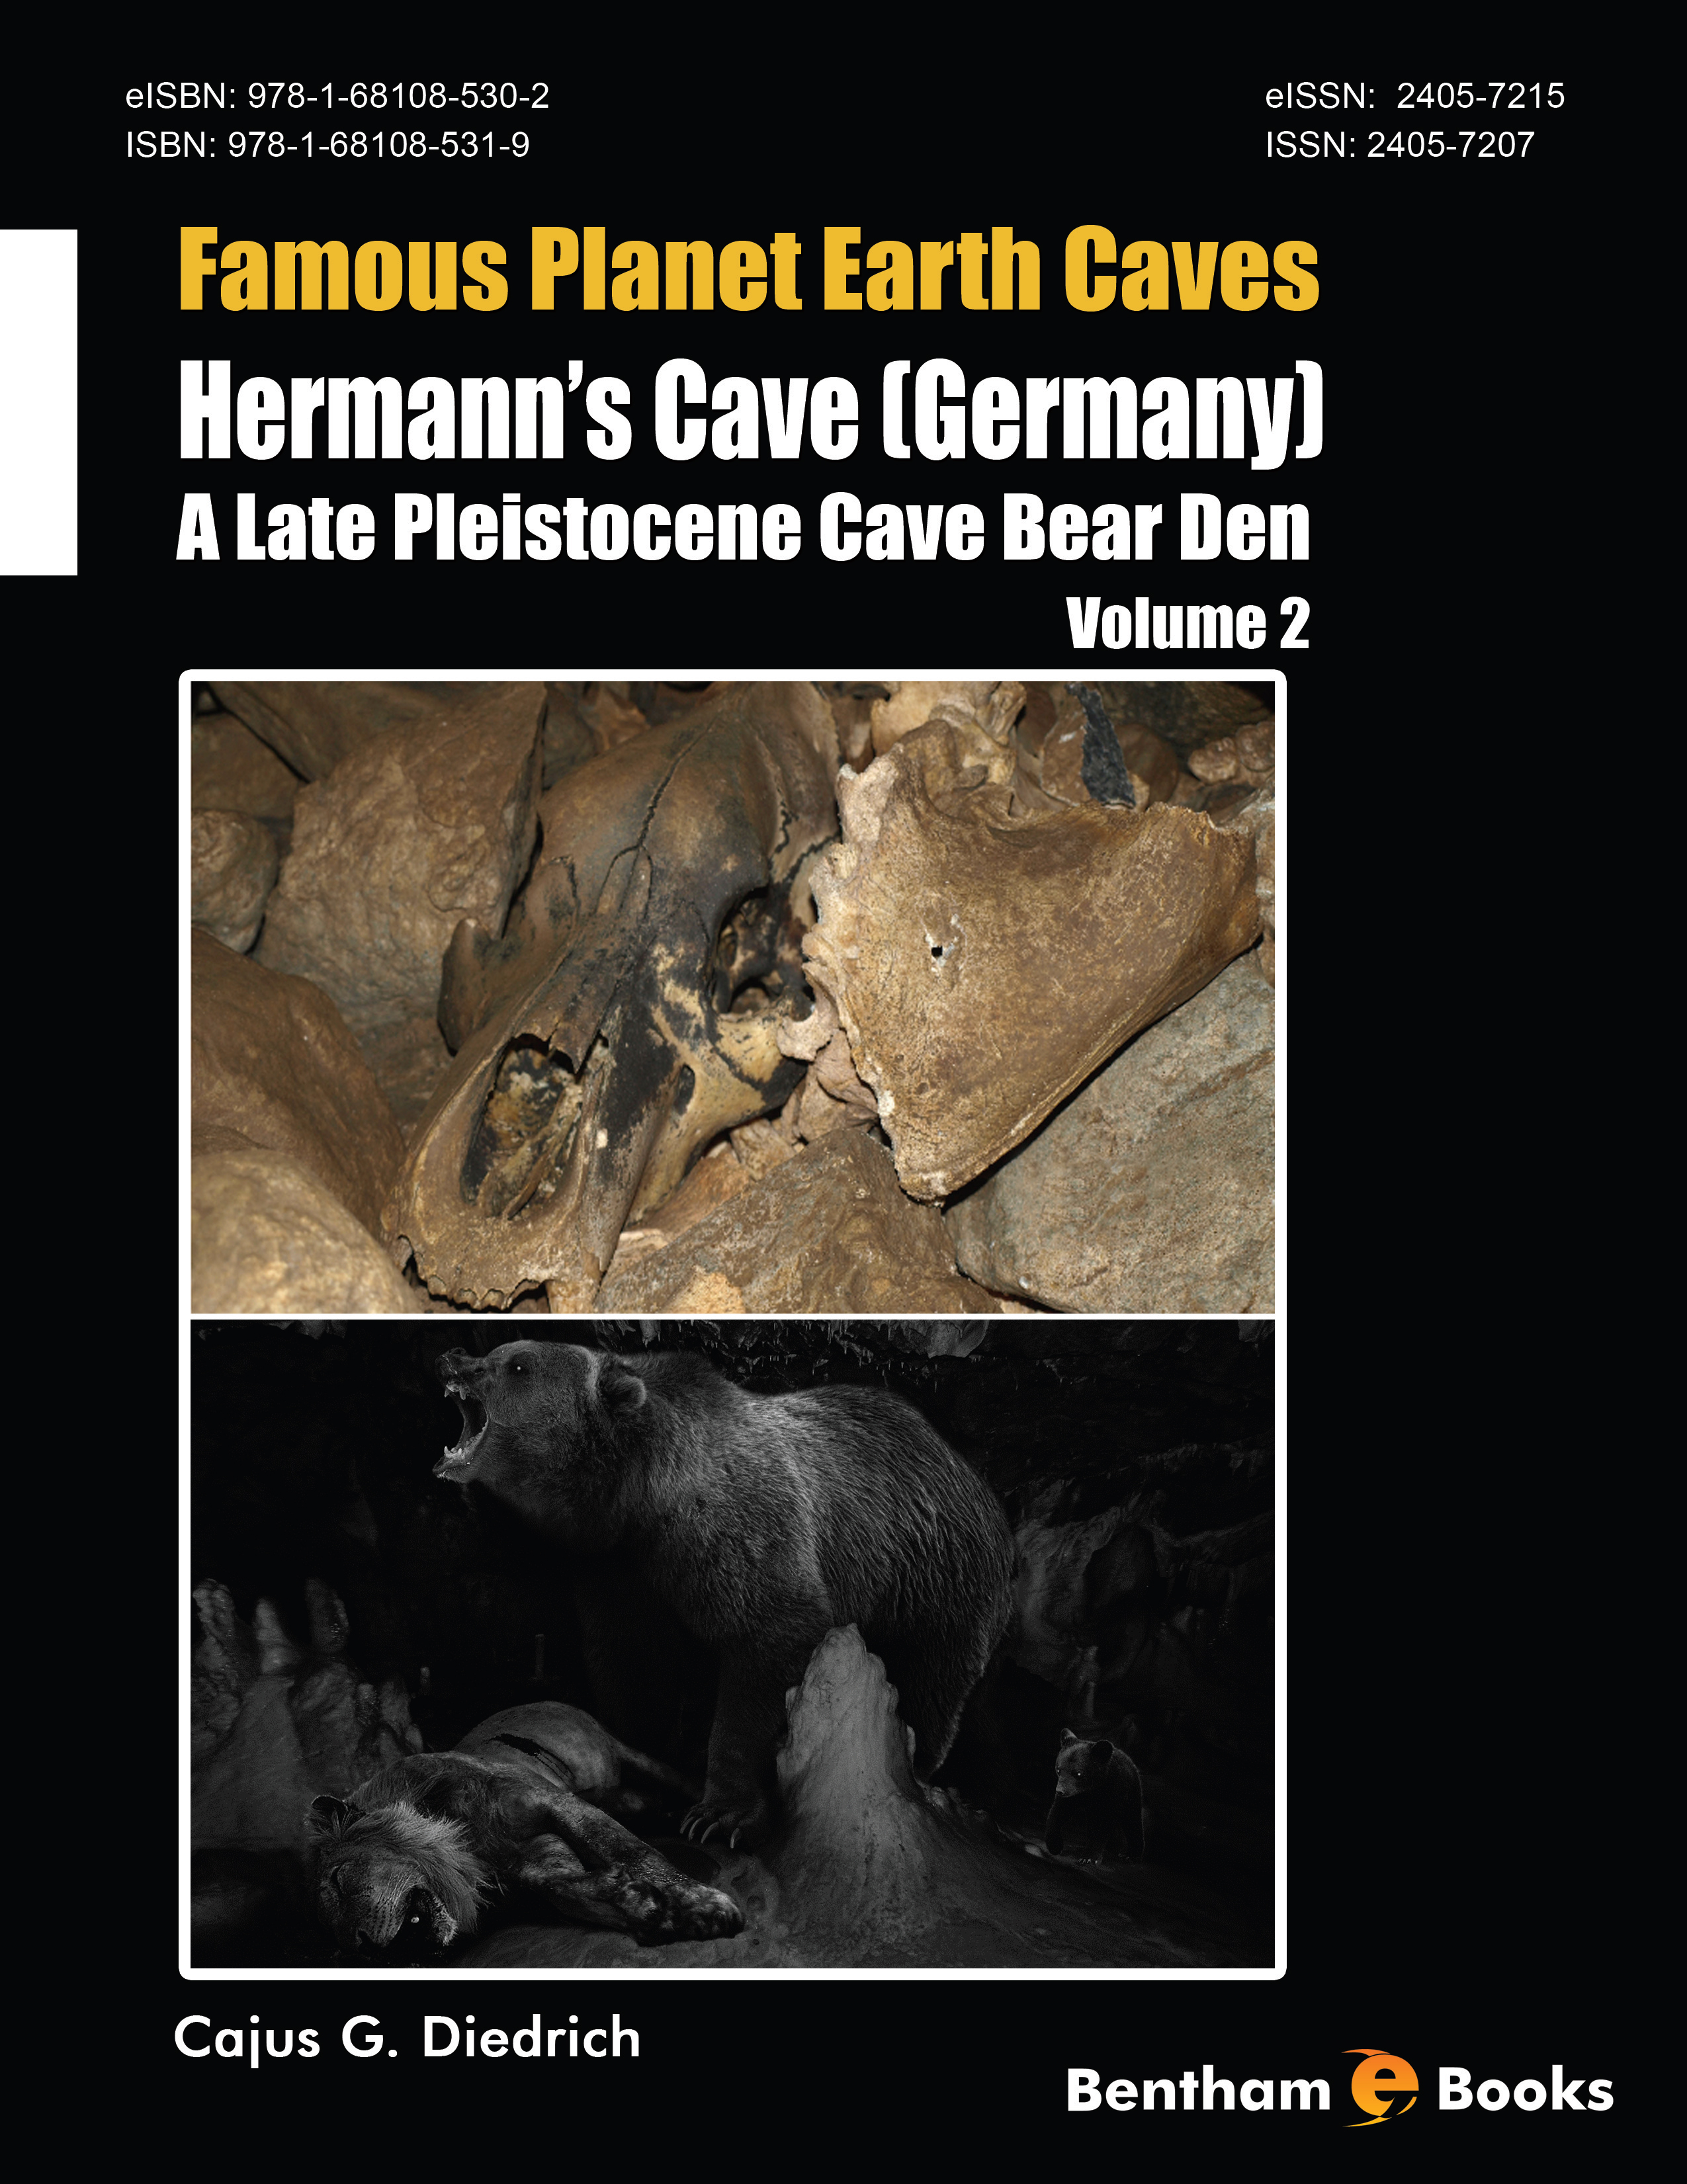 Hermann’s Cave (Germany) – A Late Pleistocene Cave Bear Den